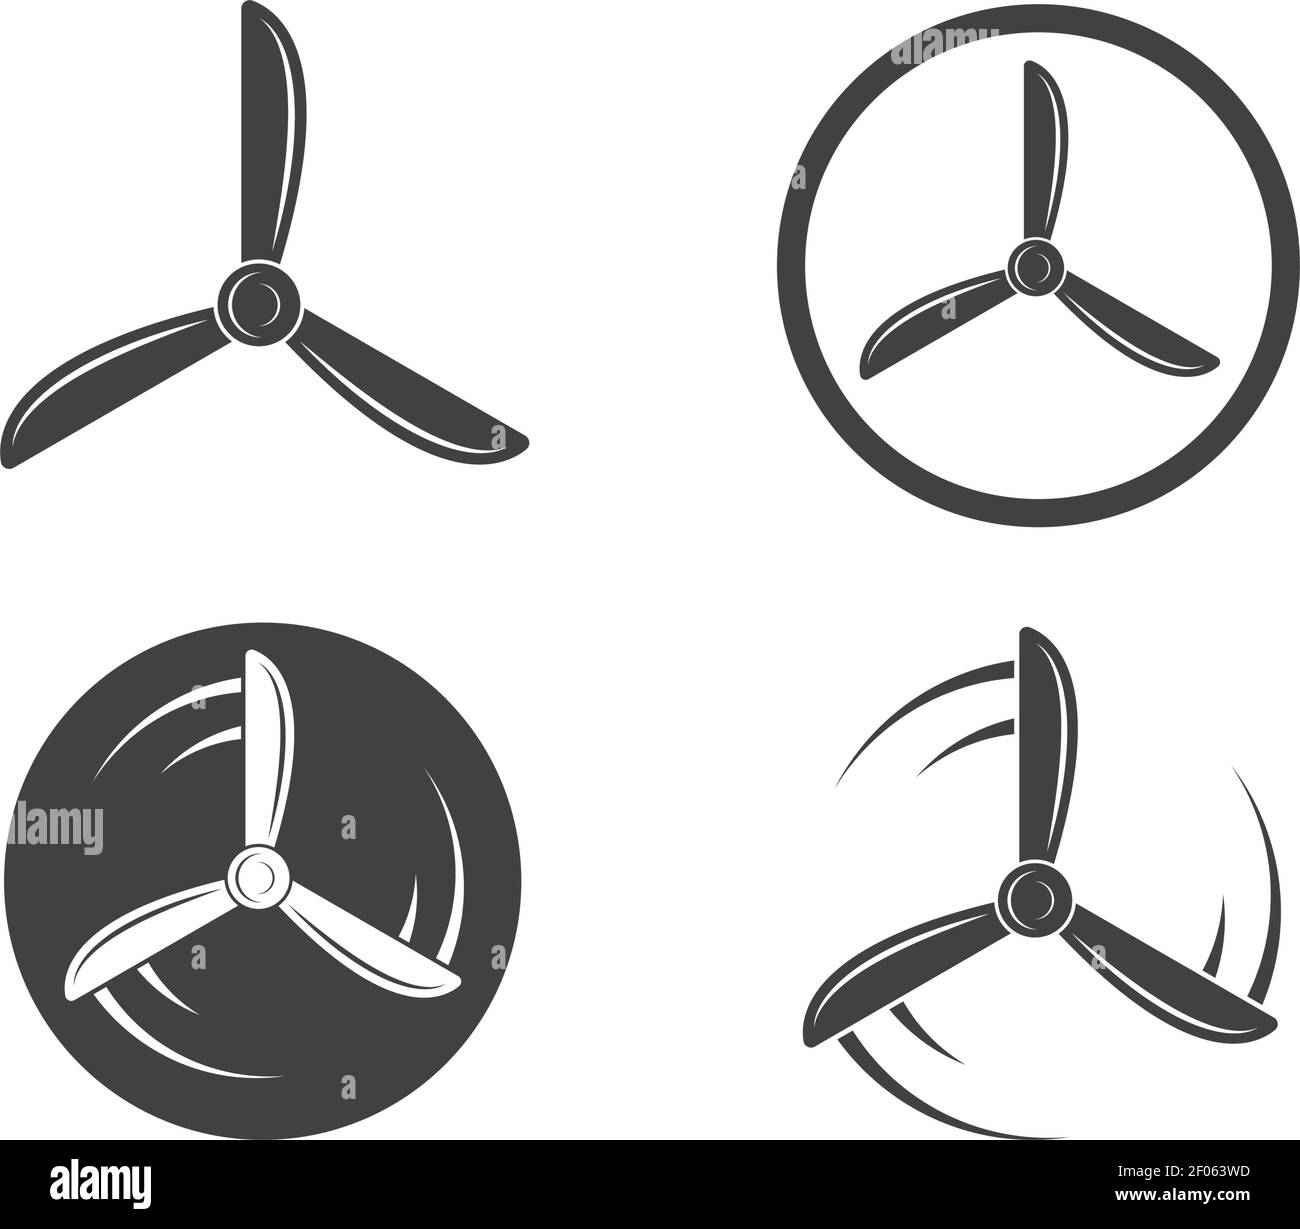 airplane propeller vector illustration design template Stock Vector ...